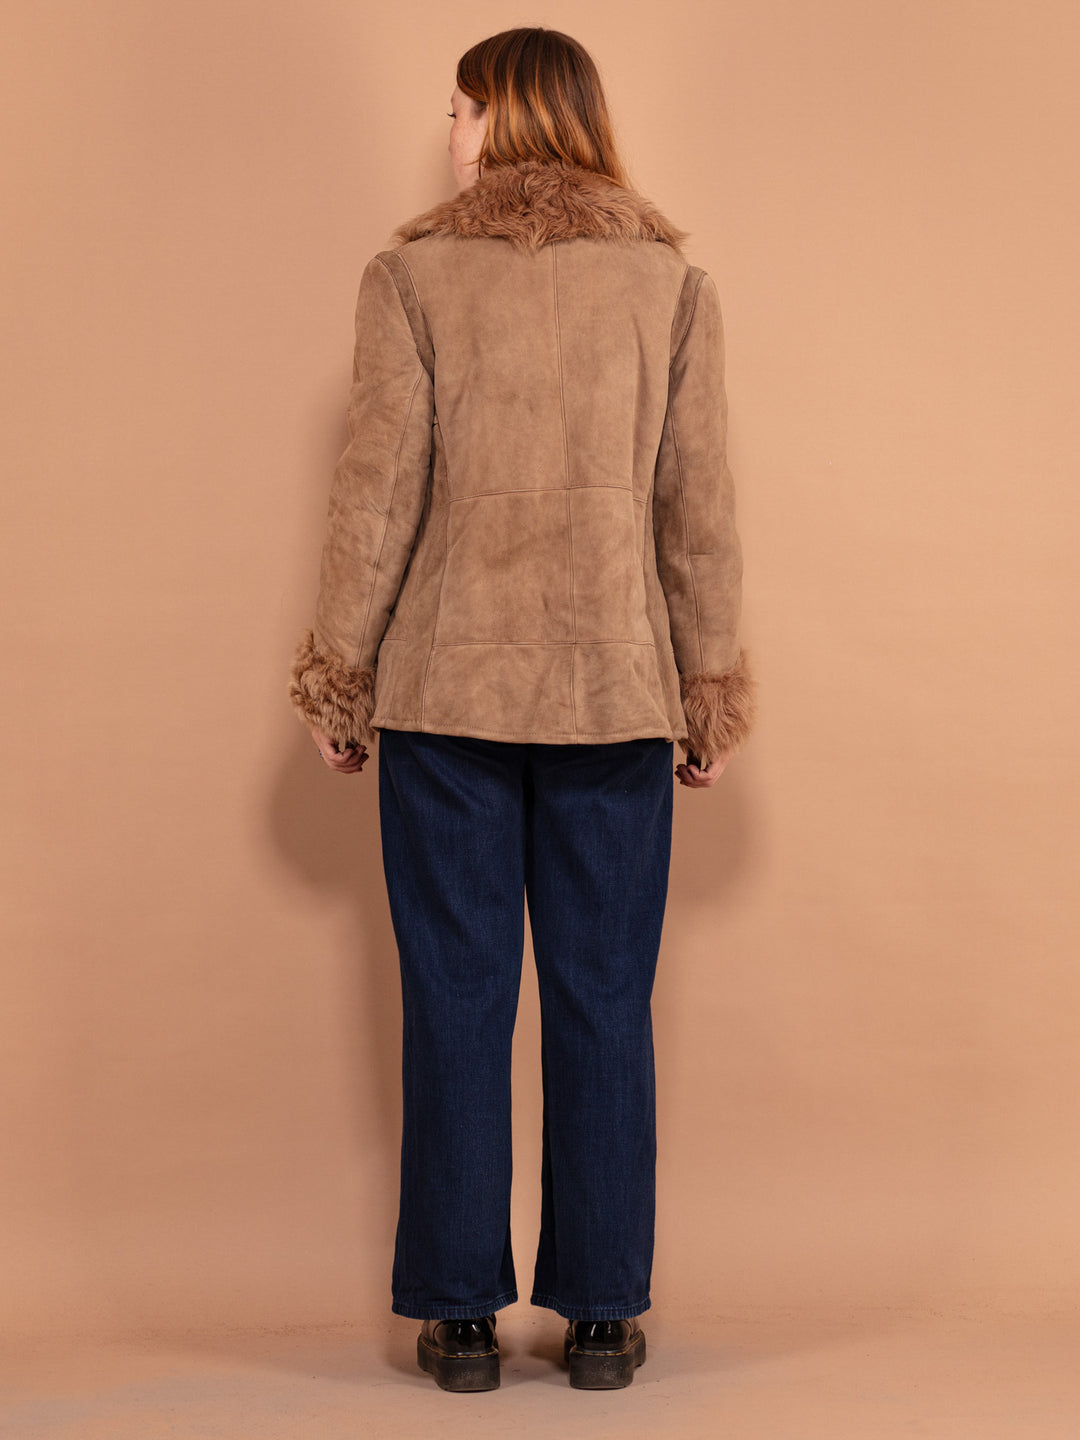 Penny Lane Sheepskin Coat 70s, Size M Medium, Women Vintage Short Fitted Penny Lane Jacket, Boho Light Brown Suede Coat, Hippie Afghan Coat